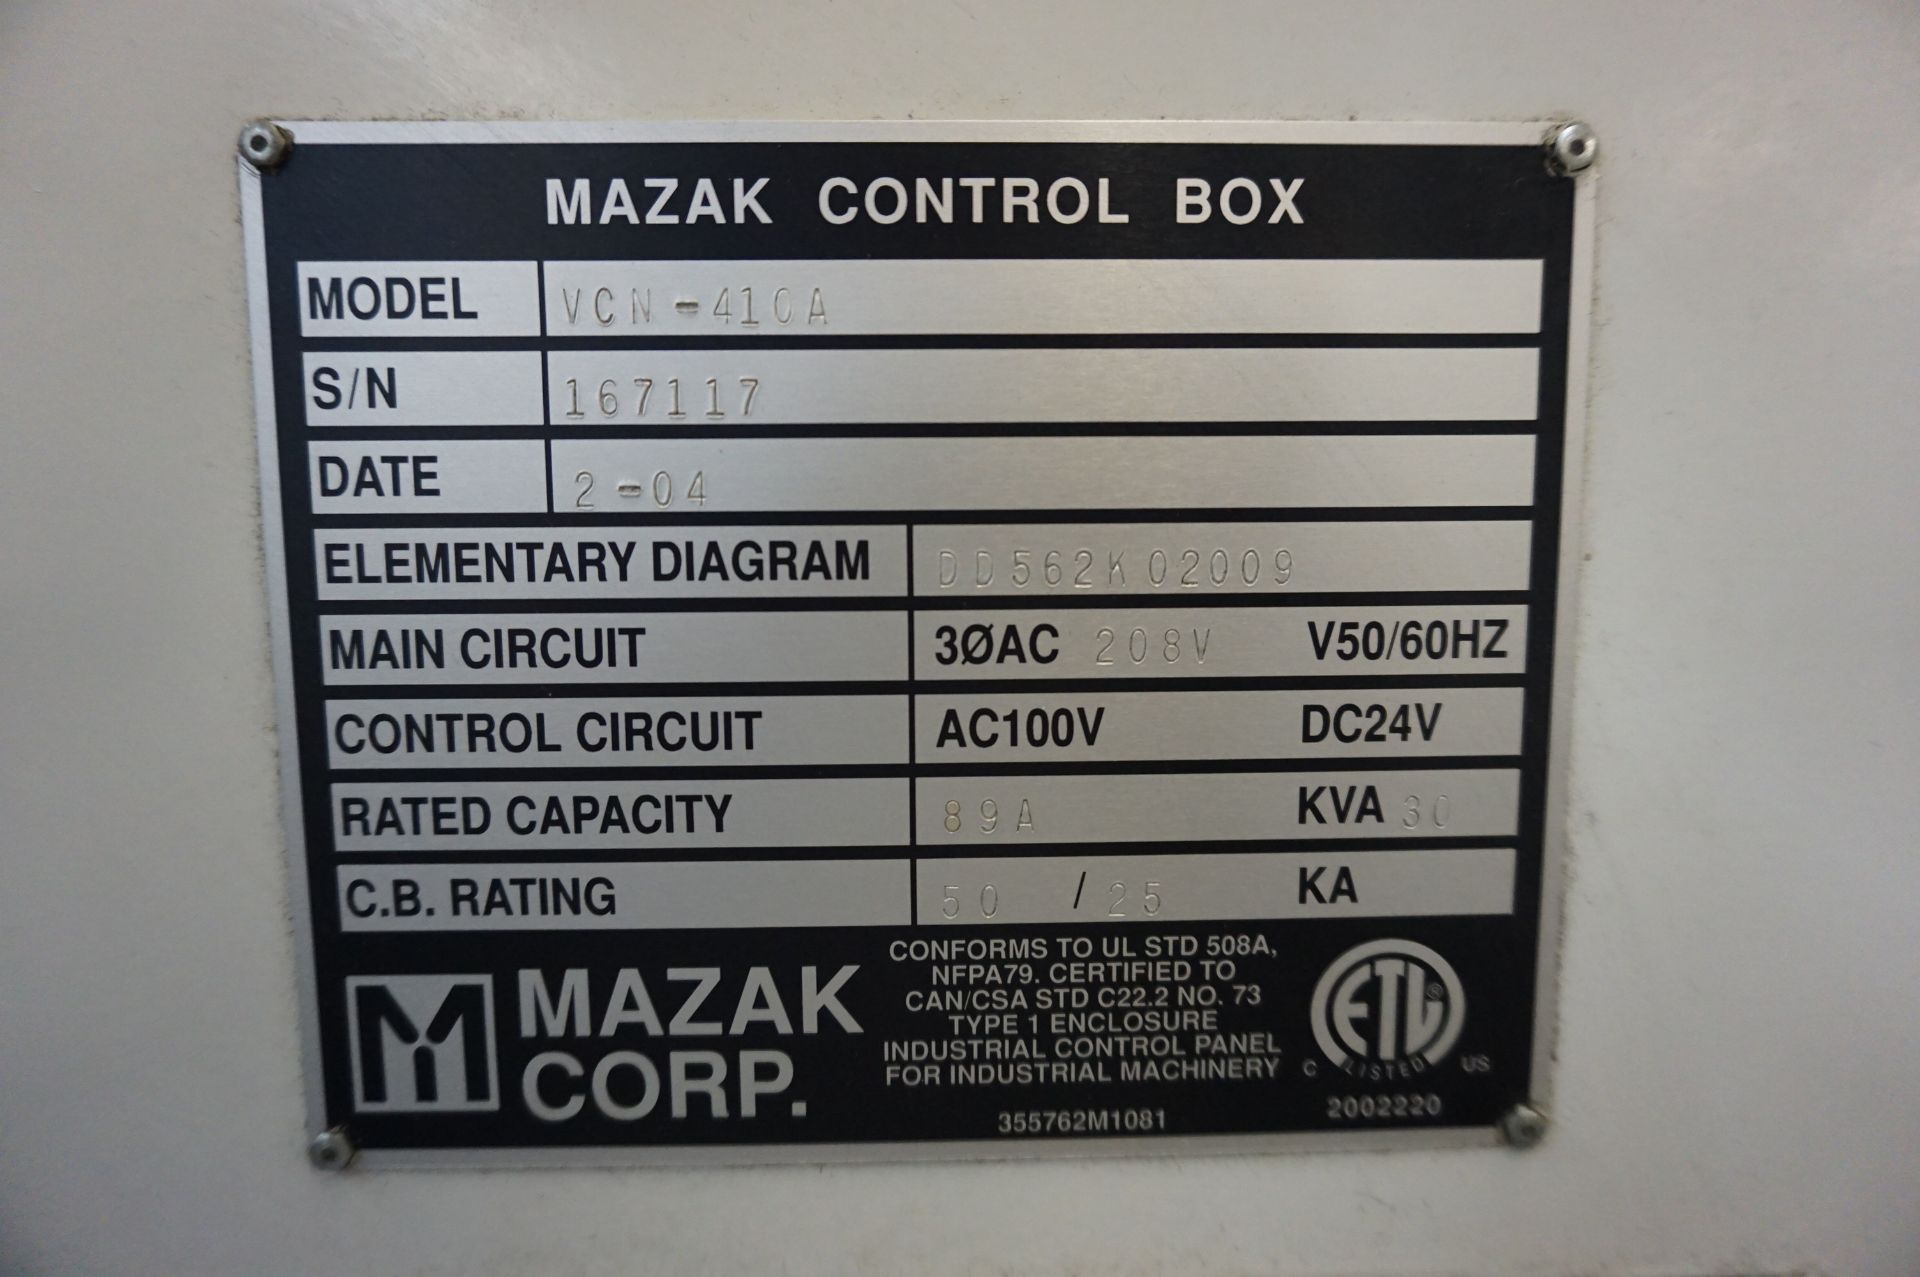 2004 MAZAK NEXUS 410A CNC VERTICAL MACHINING CENTER, 20" X 20" X 20" TABLE, MODEL VCN-410A, S/N - Image 7 of 10